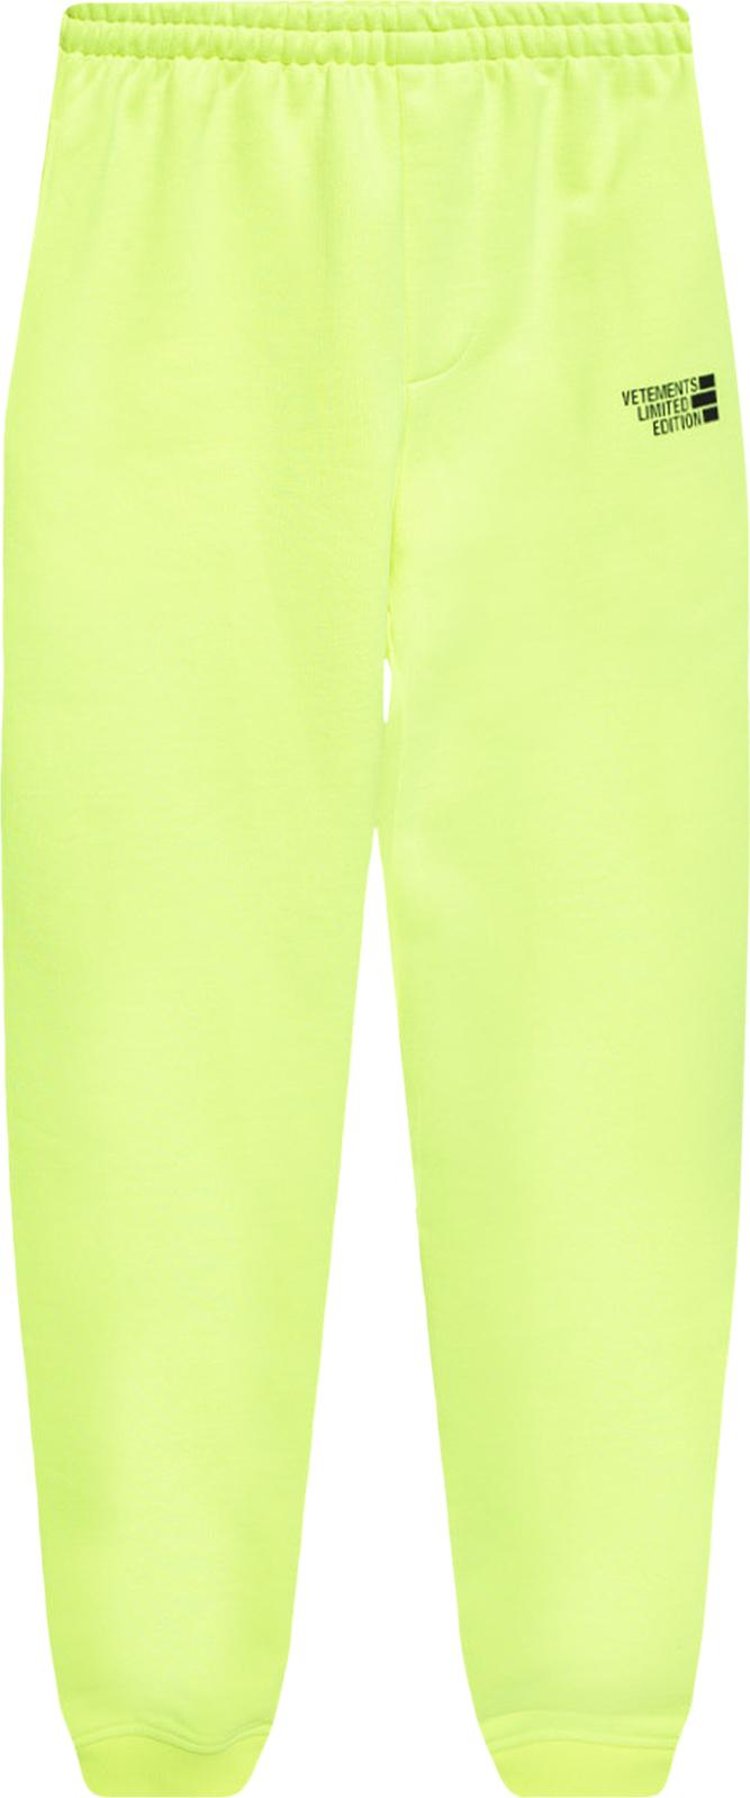 Vetements Limited Edition Sweatpants 'Neon Yellow'